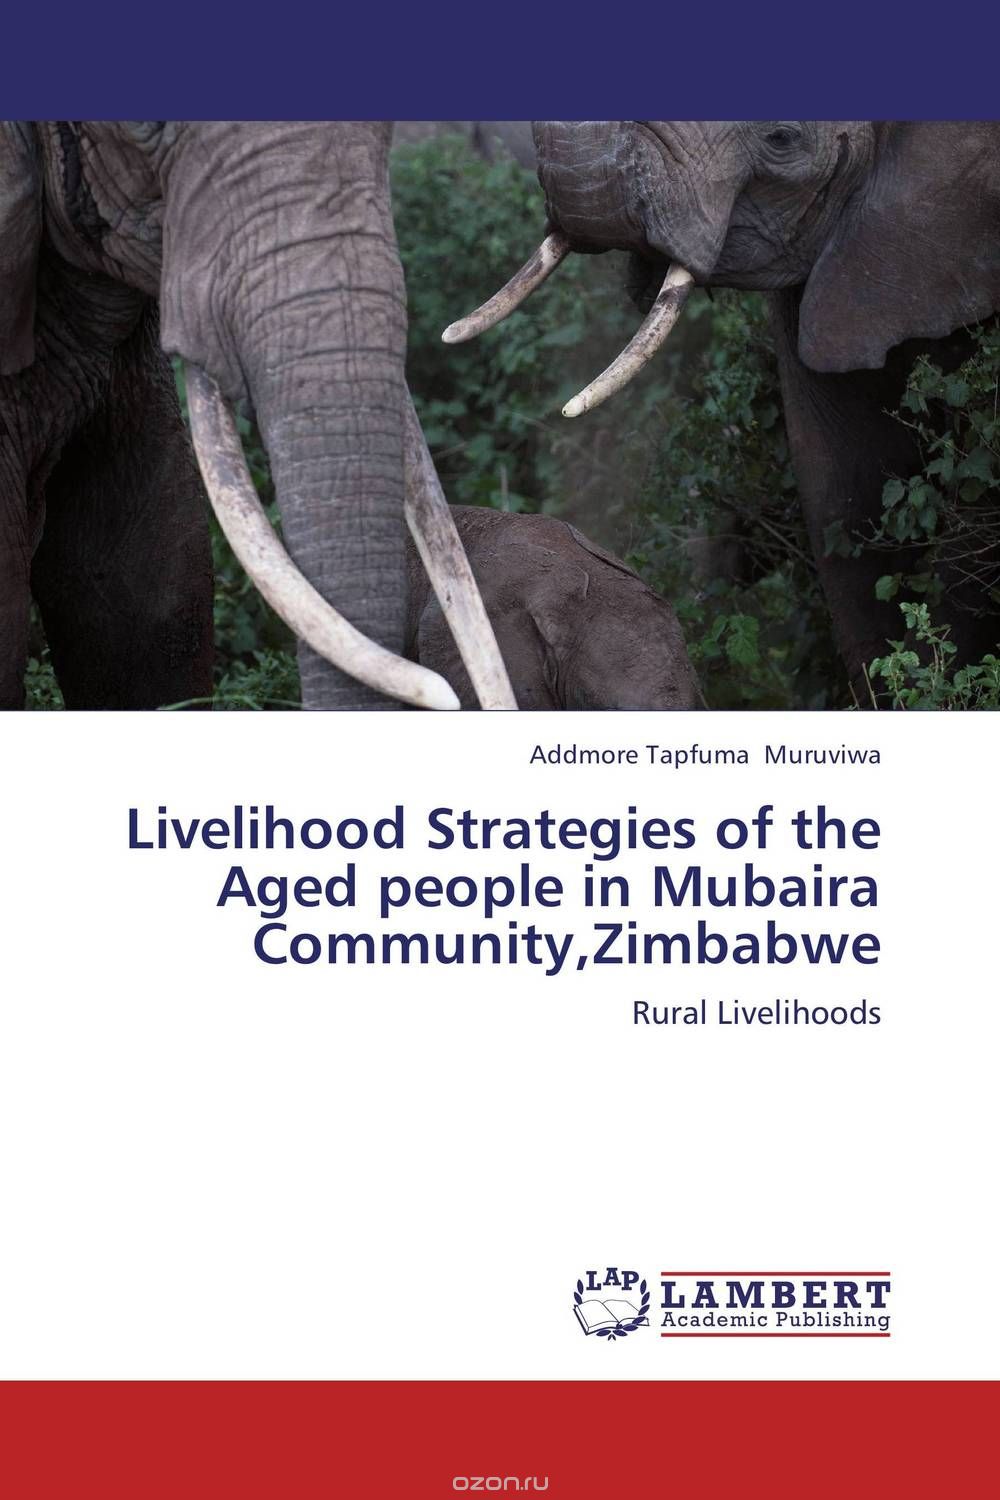 Скачать книгу "Livelihood Strategies of the Aged people in Mubaira Community,Zimbabwe"